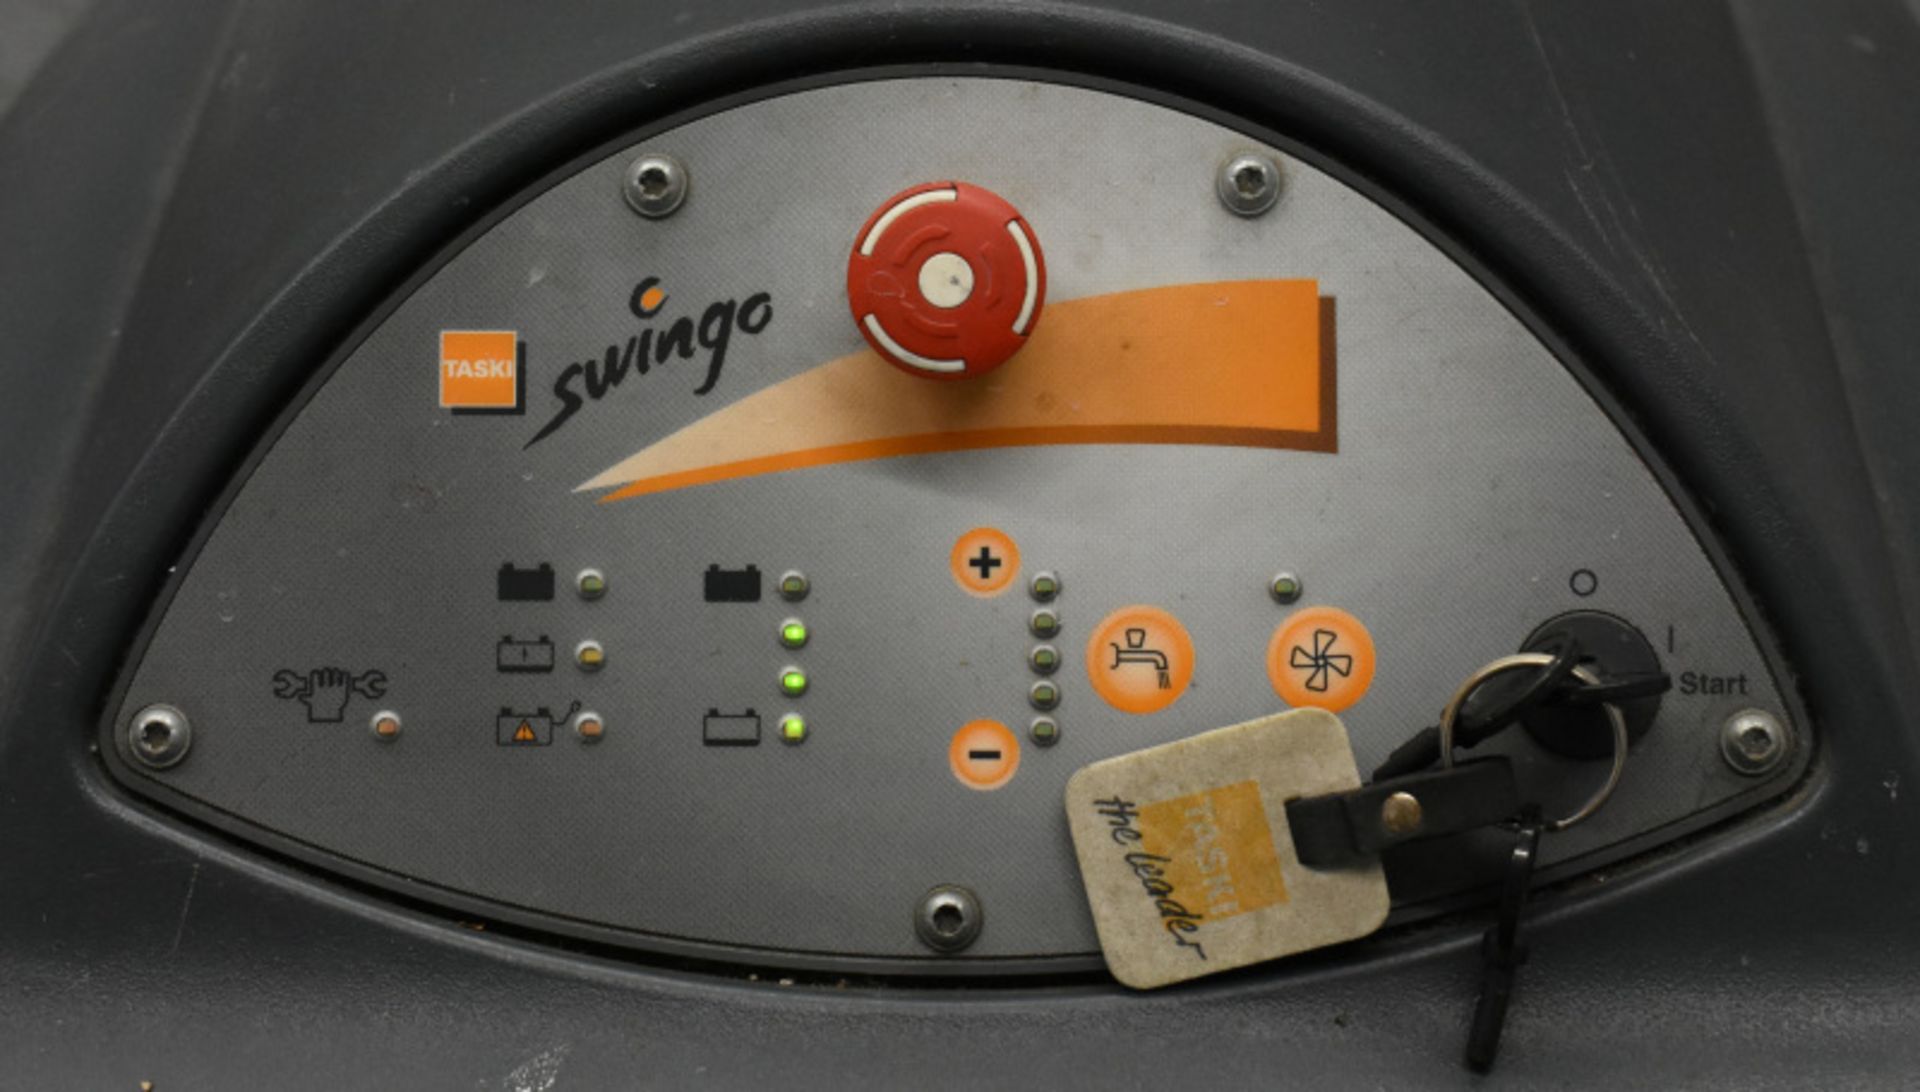 Taski Swingo 1650 Floor Scrubber Dryer, comes with key, starts and runs - Image 2 of 6